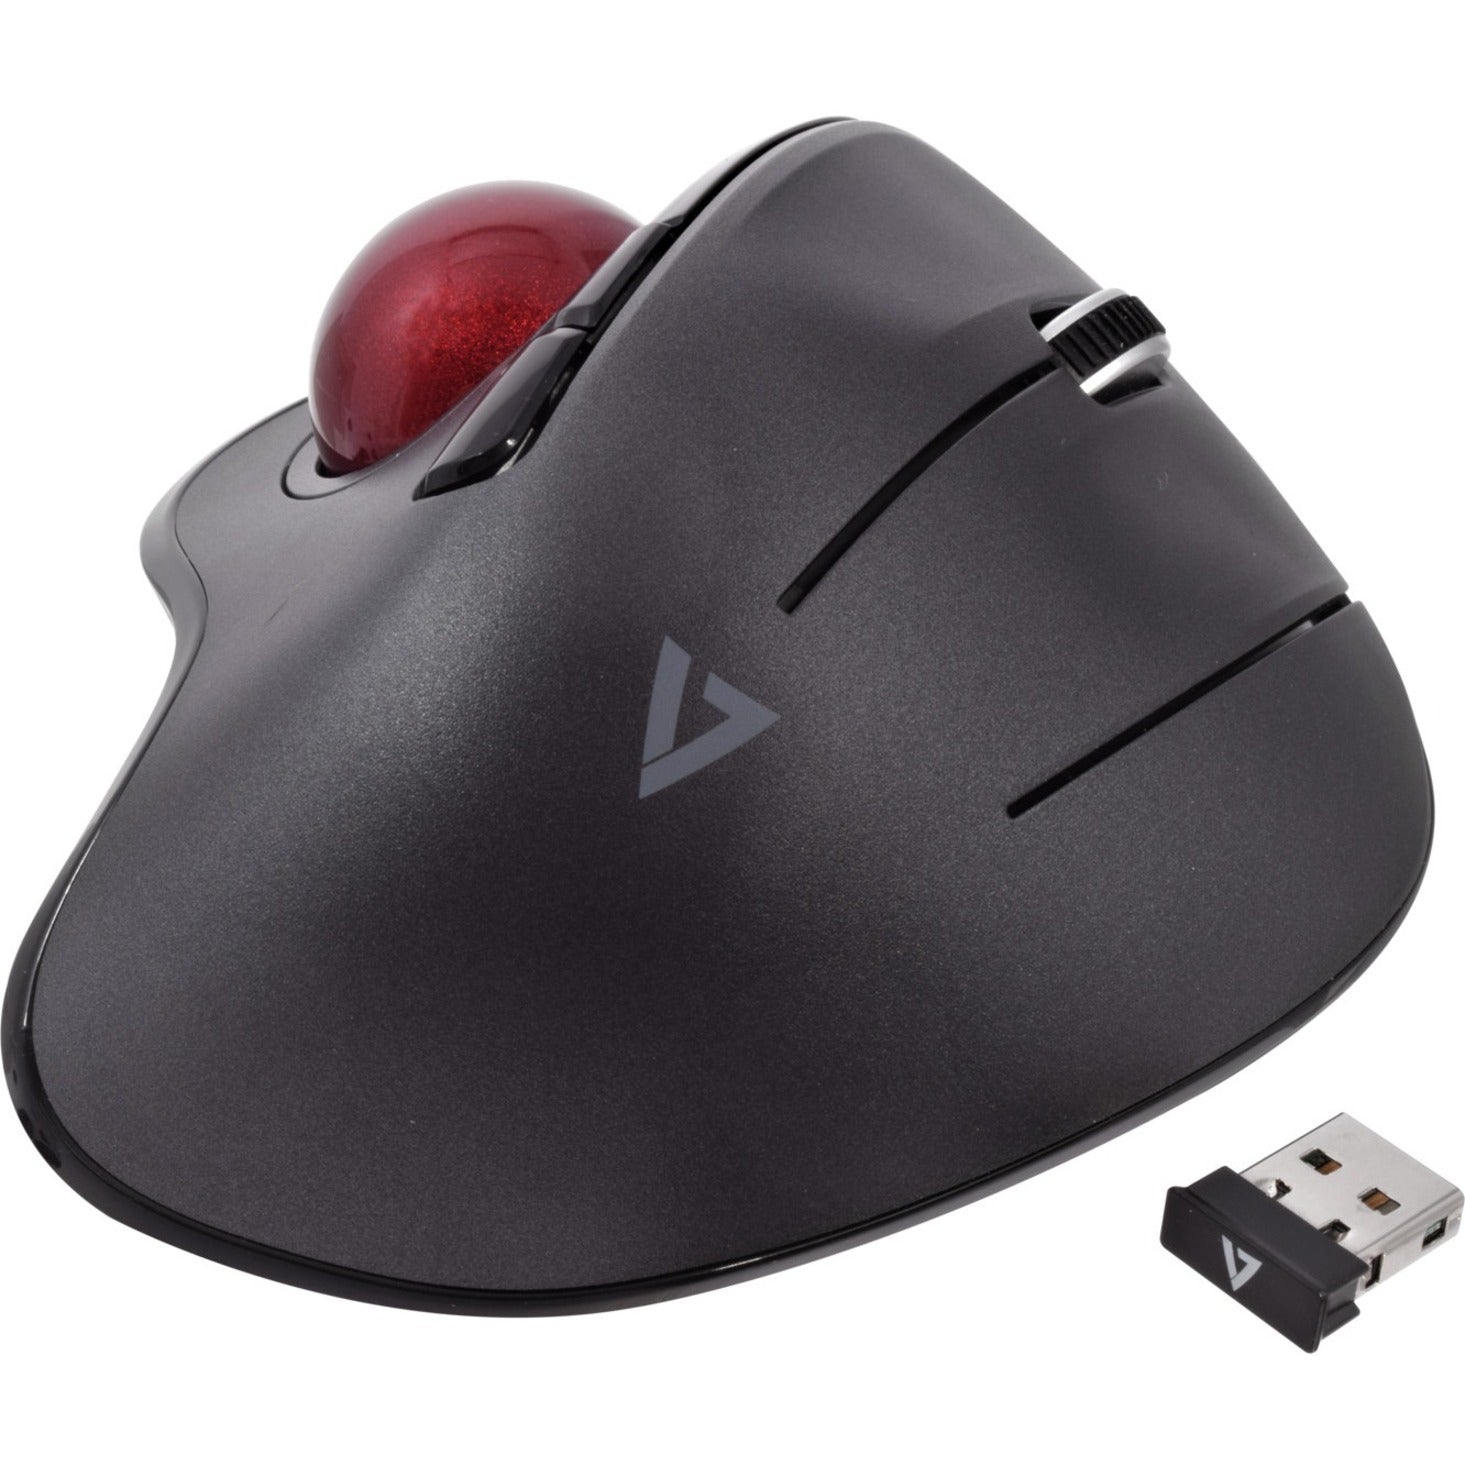 V7 MW650 Vertical Ergonomic Trackball Mouse, Wireless 6 Button Auto-speed Dpi